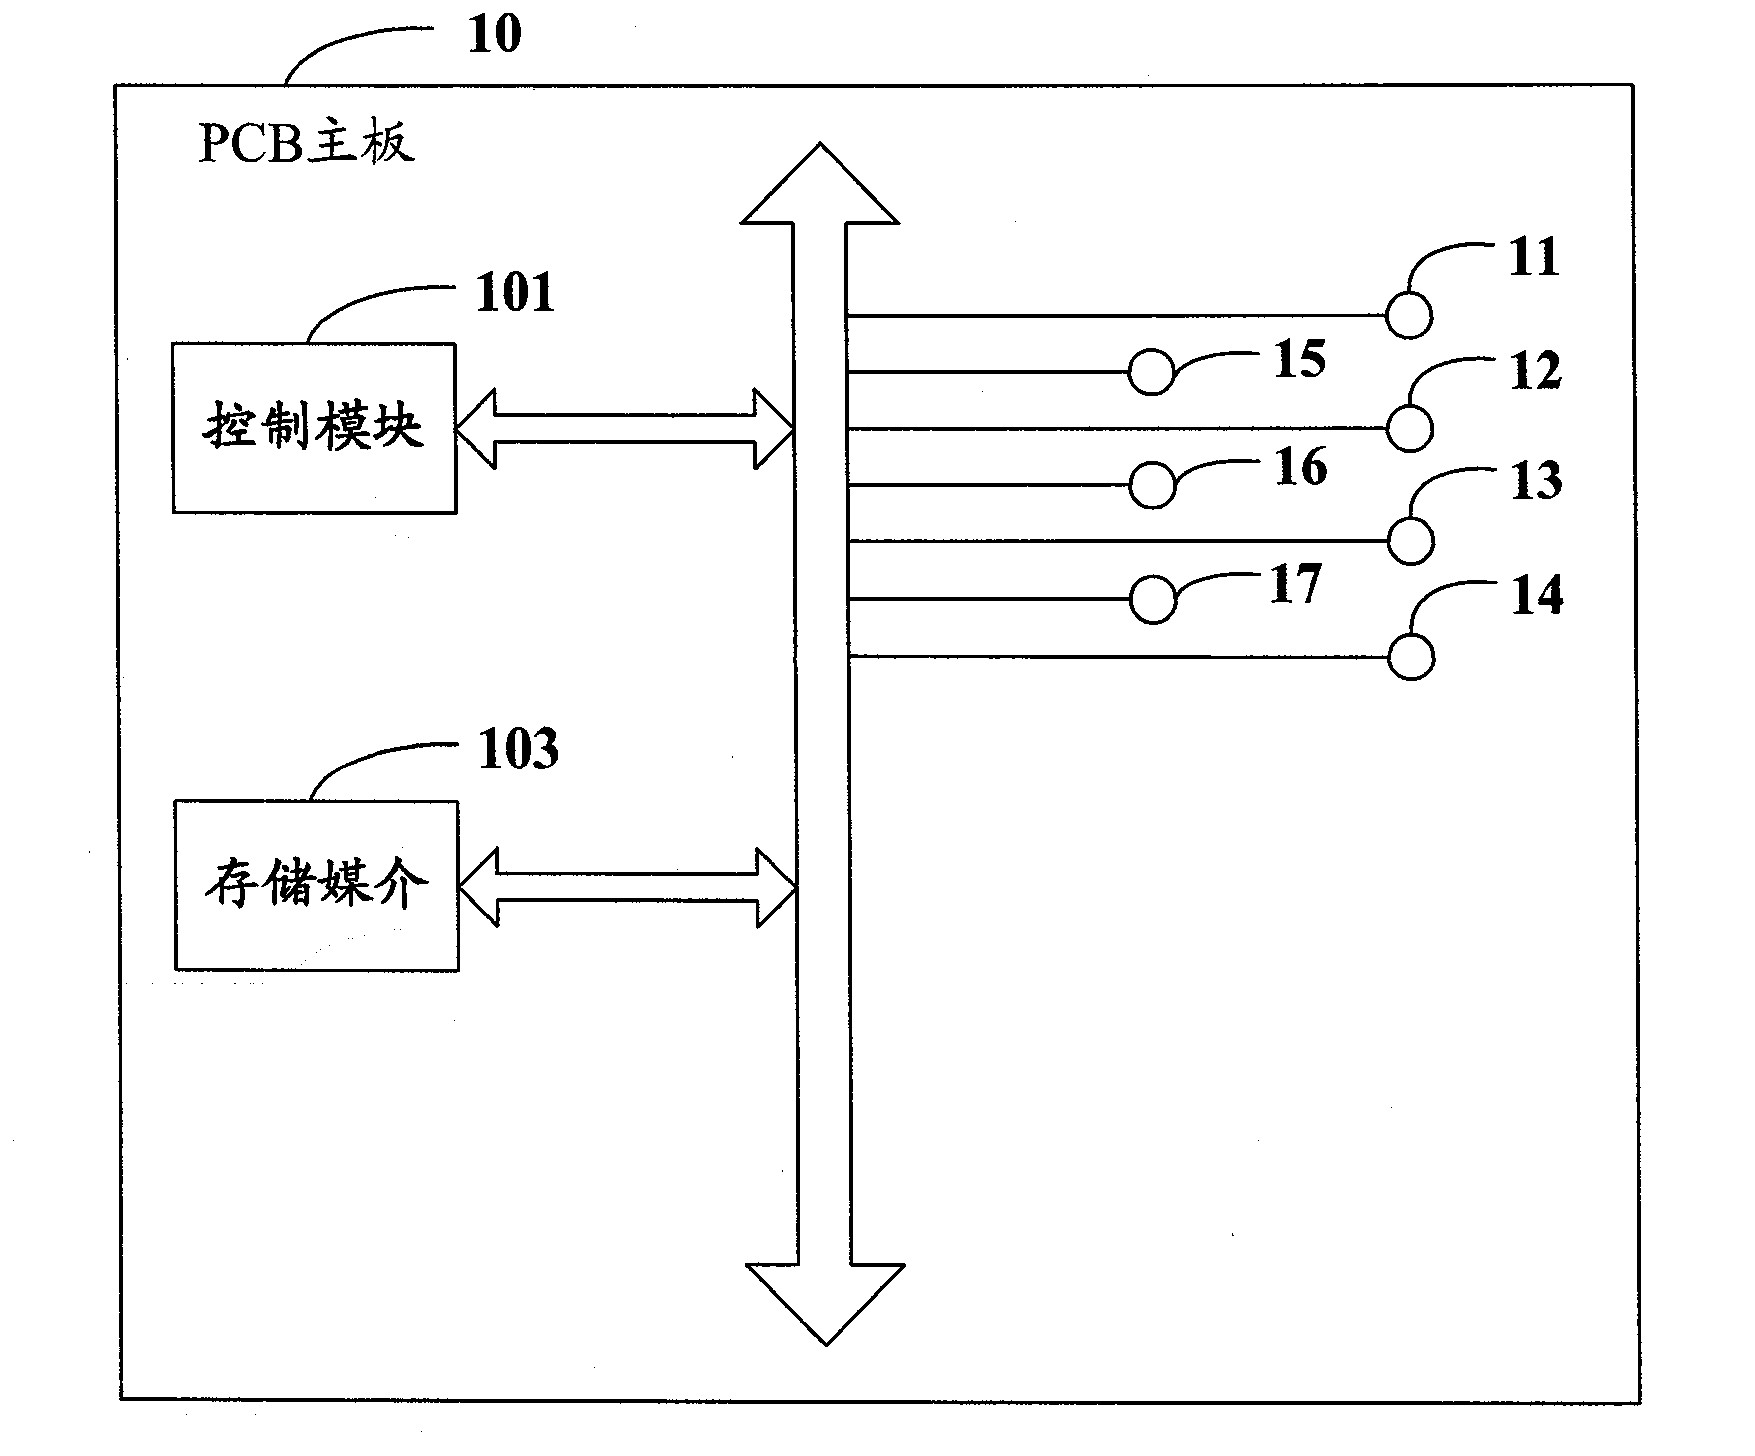 Extension PCB